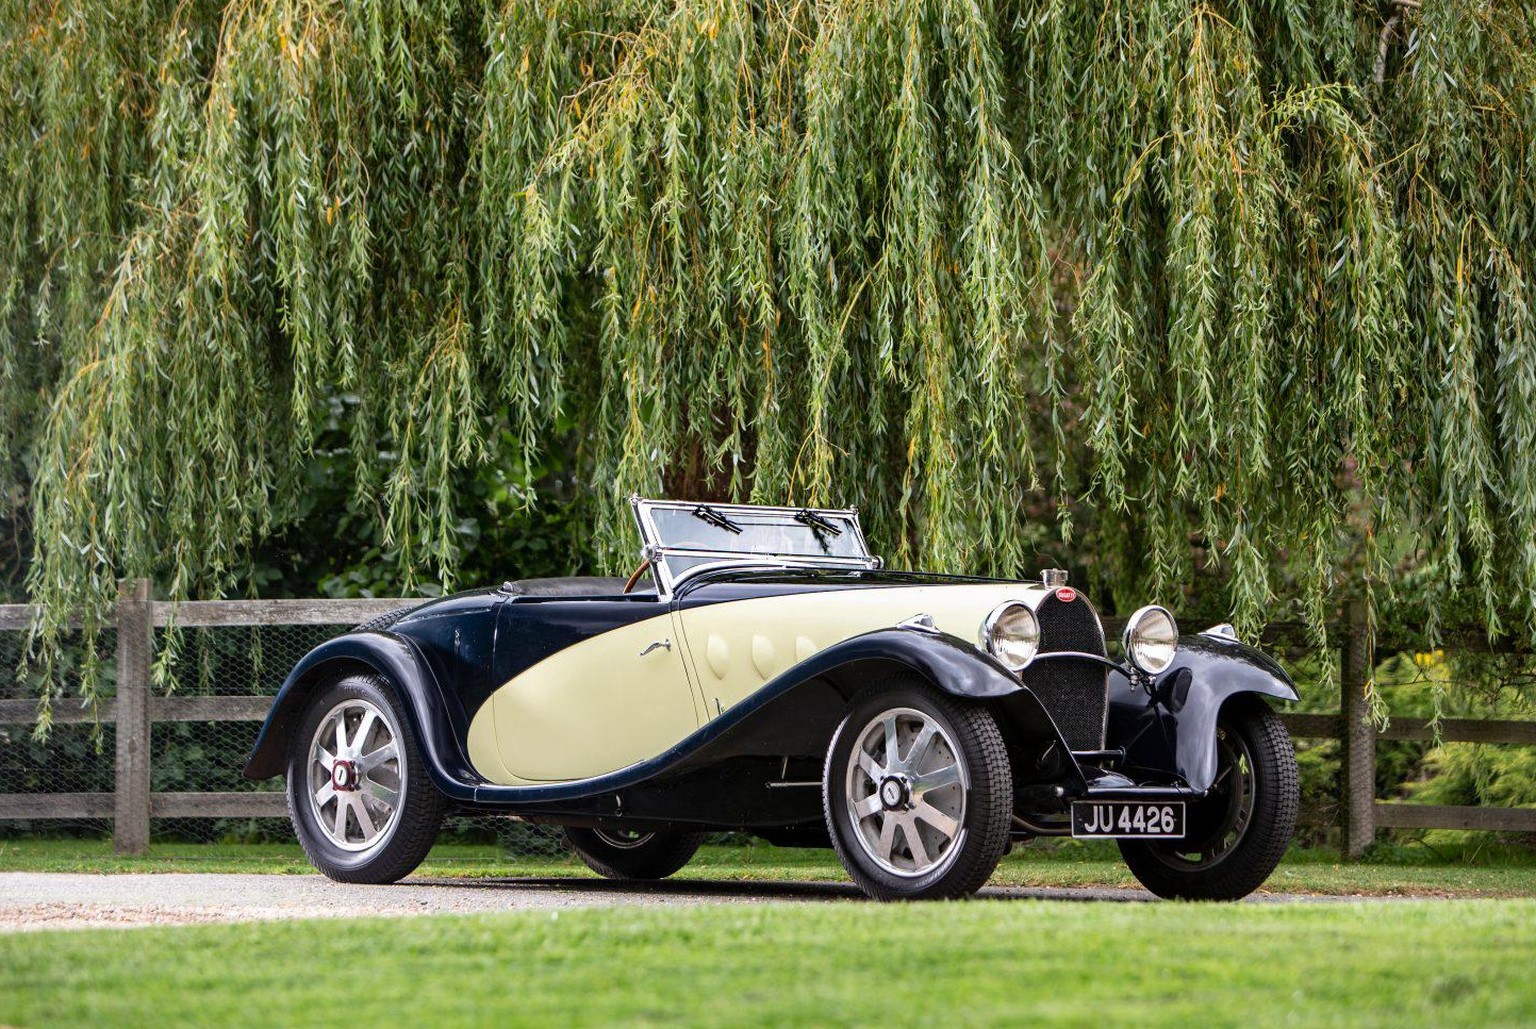 https://www.bonhams.com/auctions/26005/lot/268/

5. 1931 Bugatti Type 55 Super Sport by Figoni
Sold for €4,600,000 ($5,051,054)

Bonhams; Paris 2020; 6 February, 2020